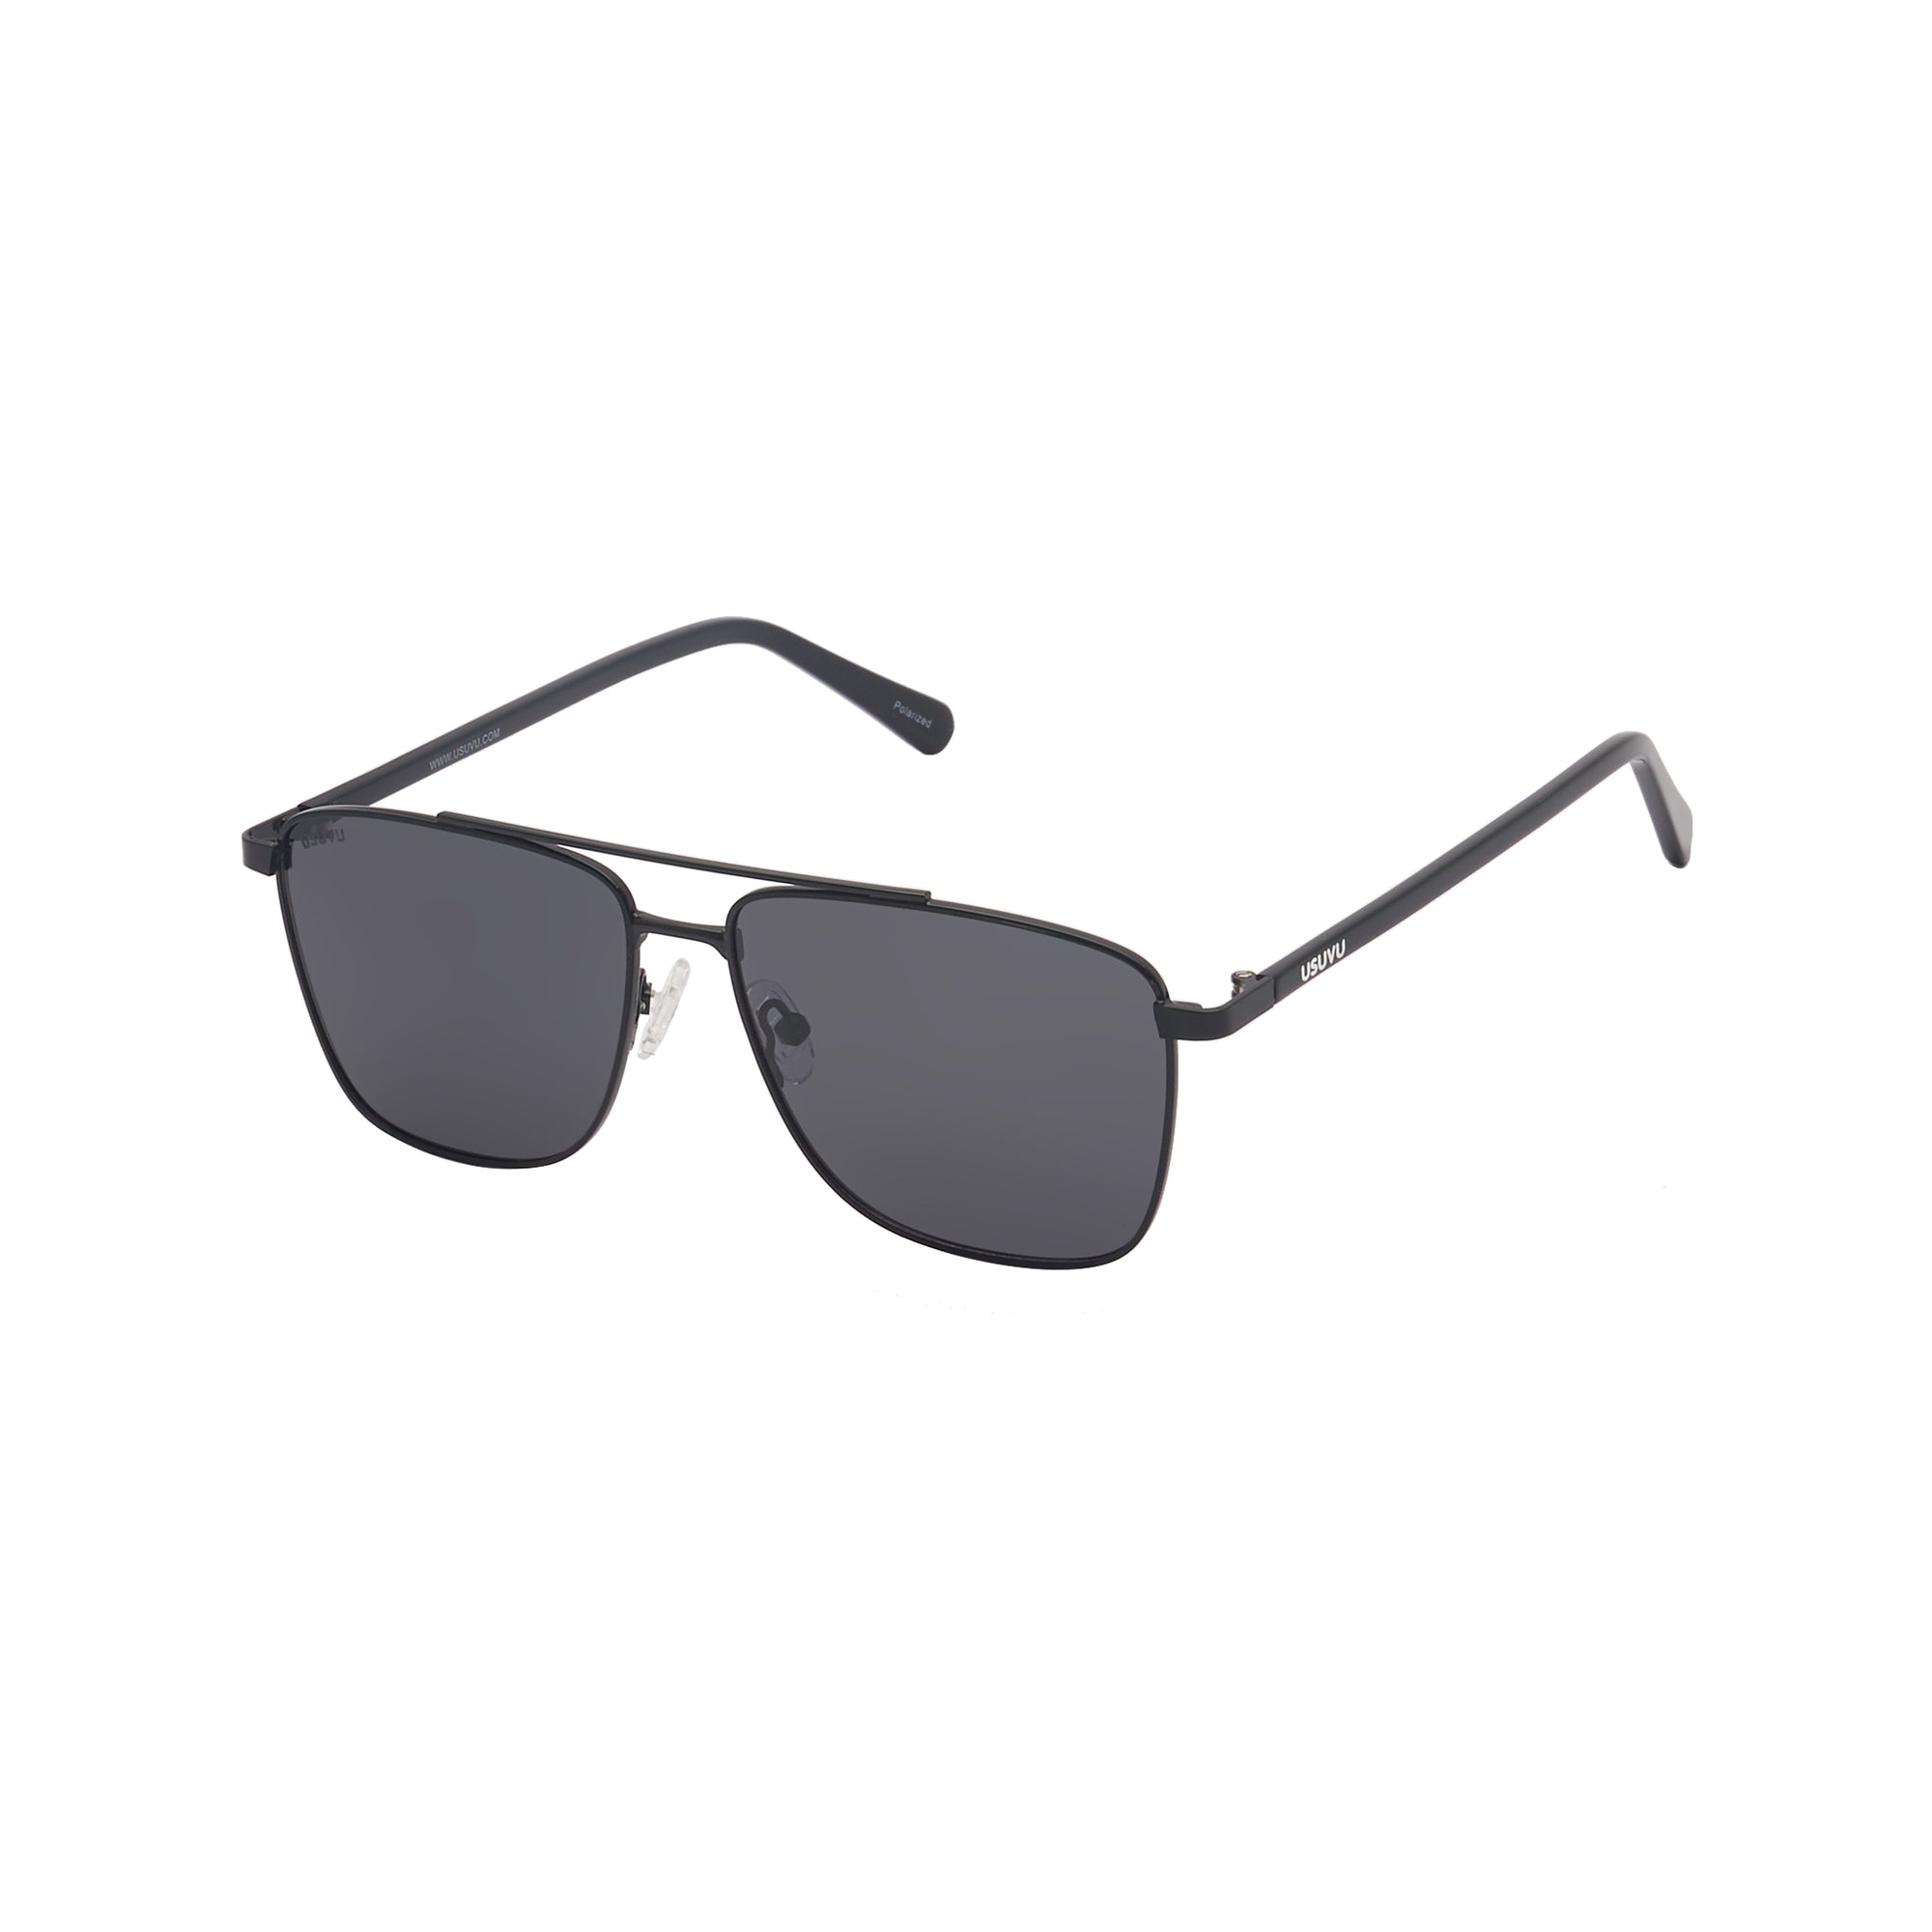 AIRCEL Sunglasses USUVU Sunglasses shades shade kuwait summer trolley @trolleyKW ترولي نظارات نظارة الكويت كويت شمس